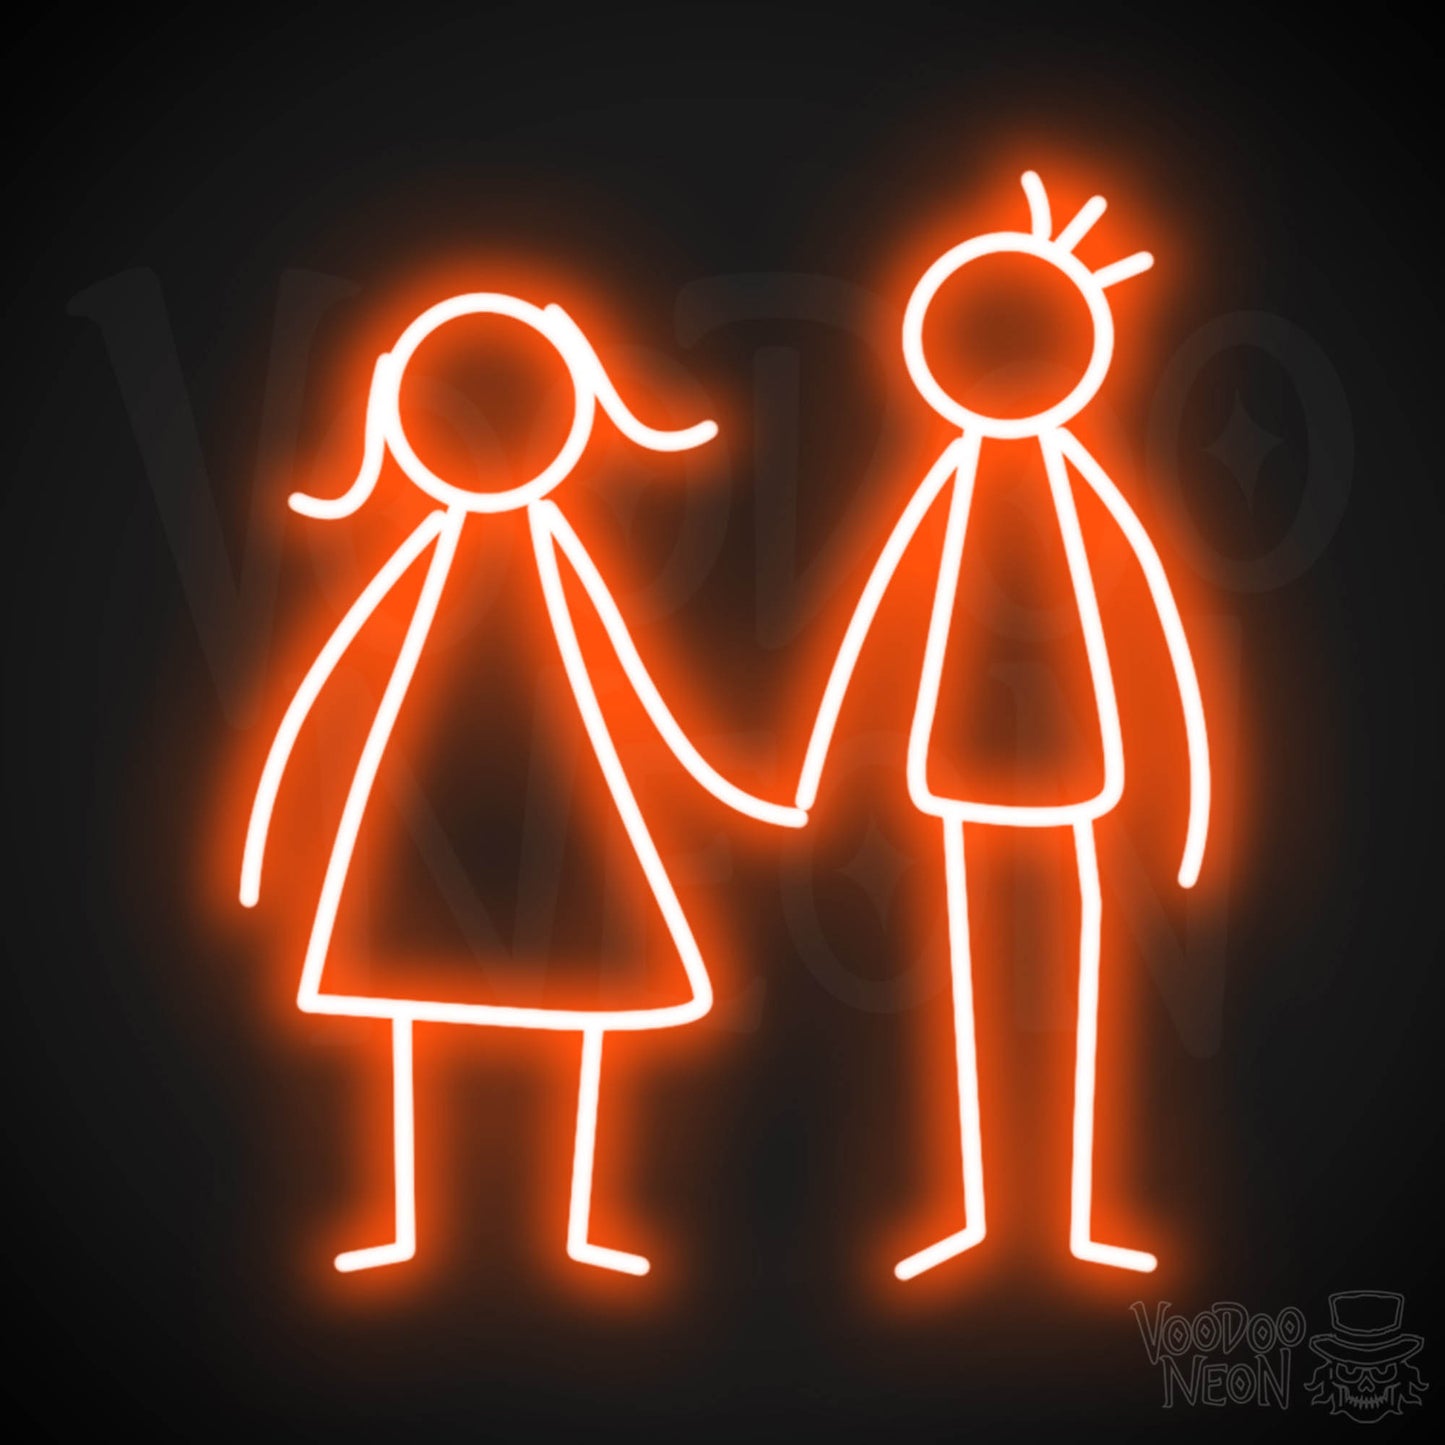 Stick Figures Holding Hands Neon Sign - Neon Stick Figures Wall Art - Color Orange